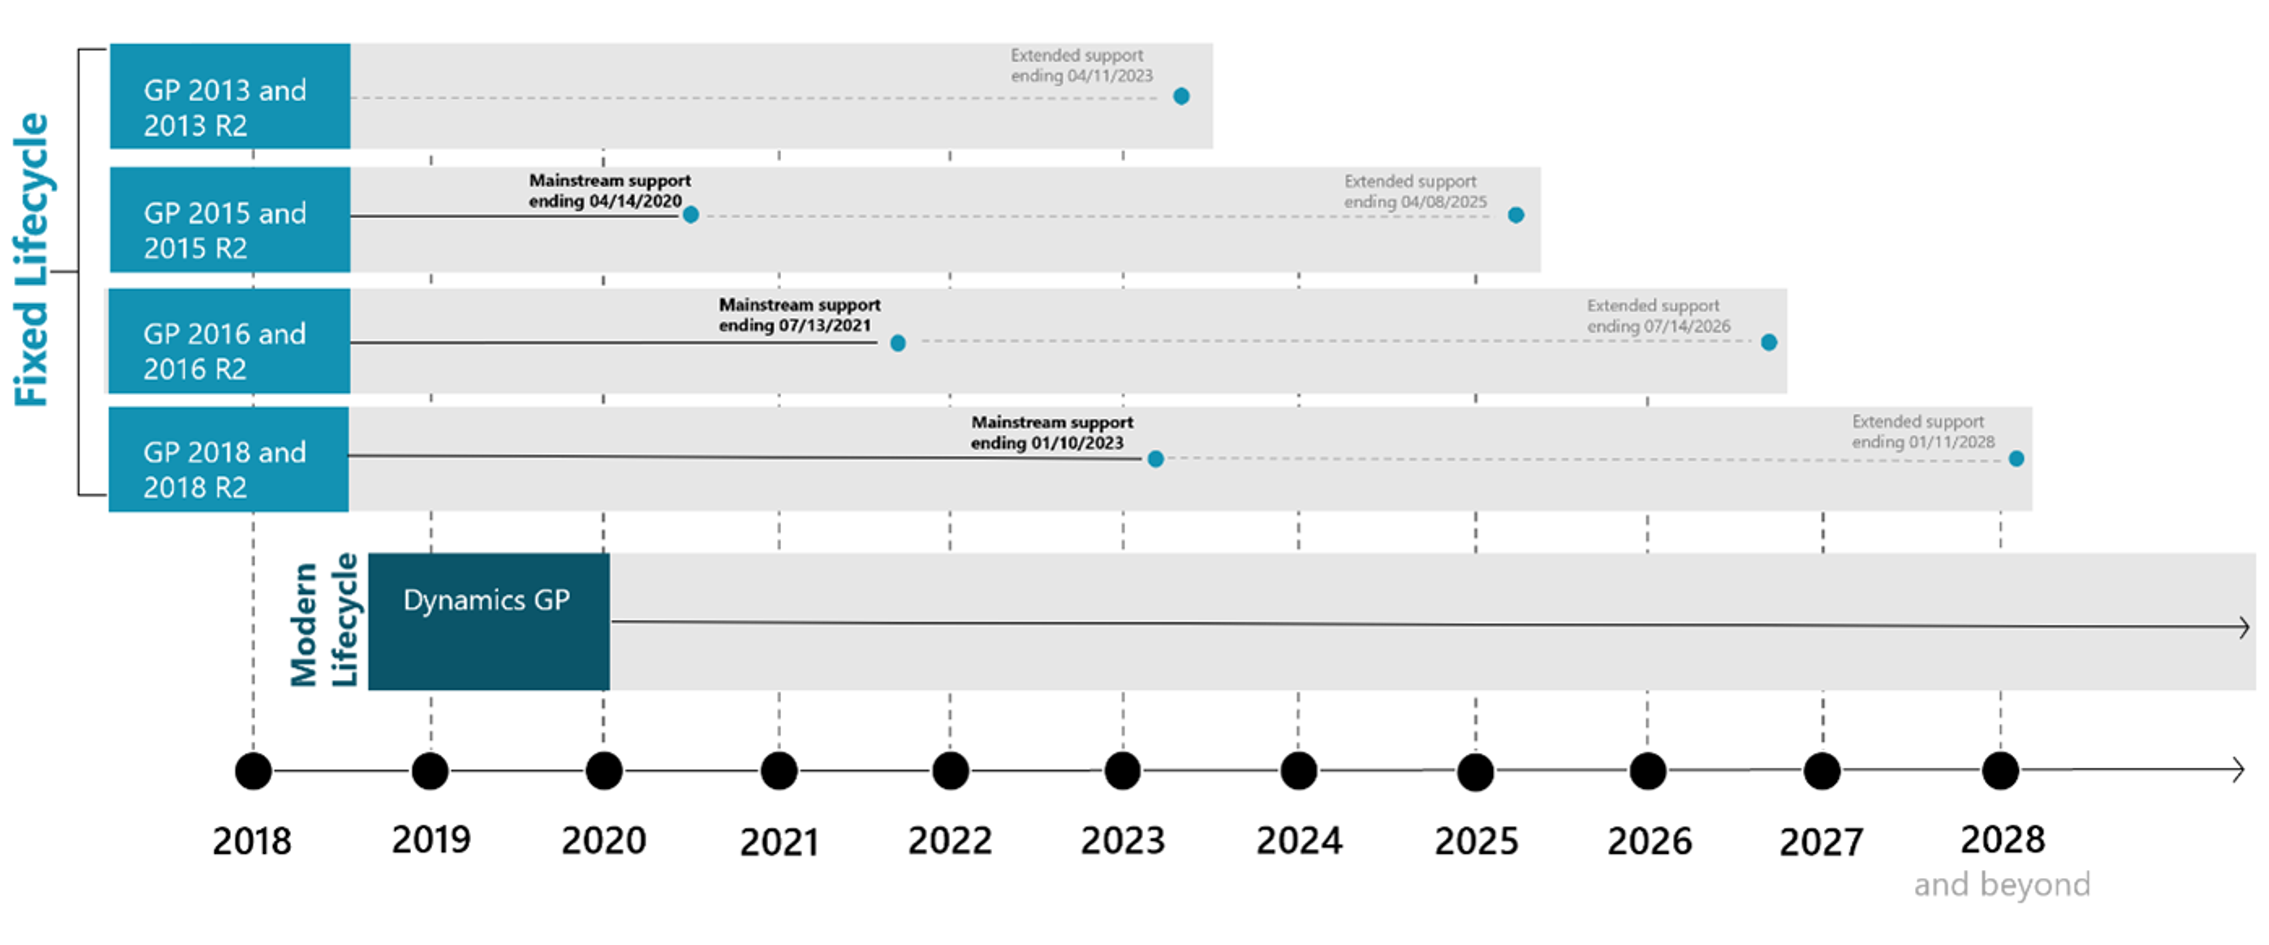 TMC Microsoft Partner Dynamics GP Roadmap 2028 what are your options